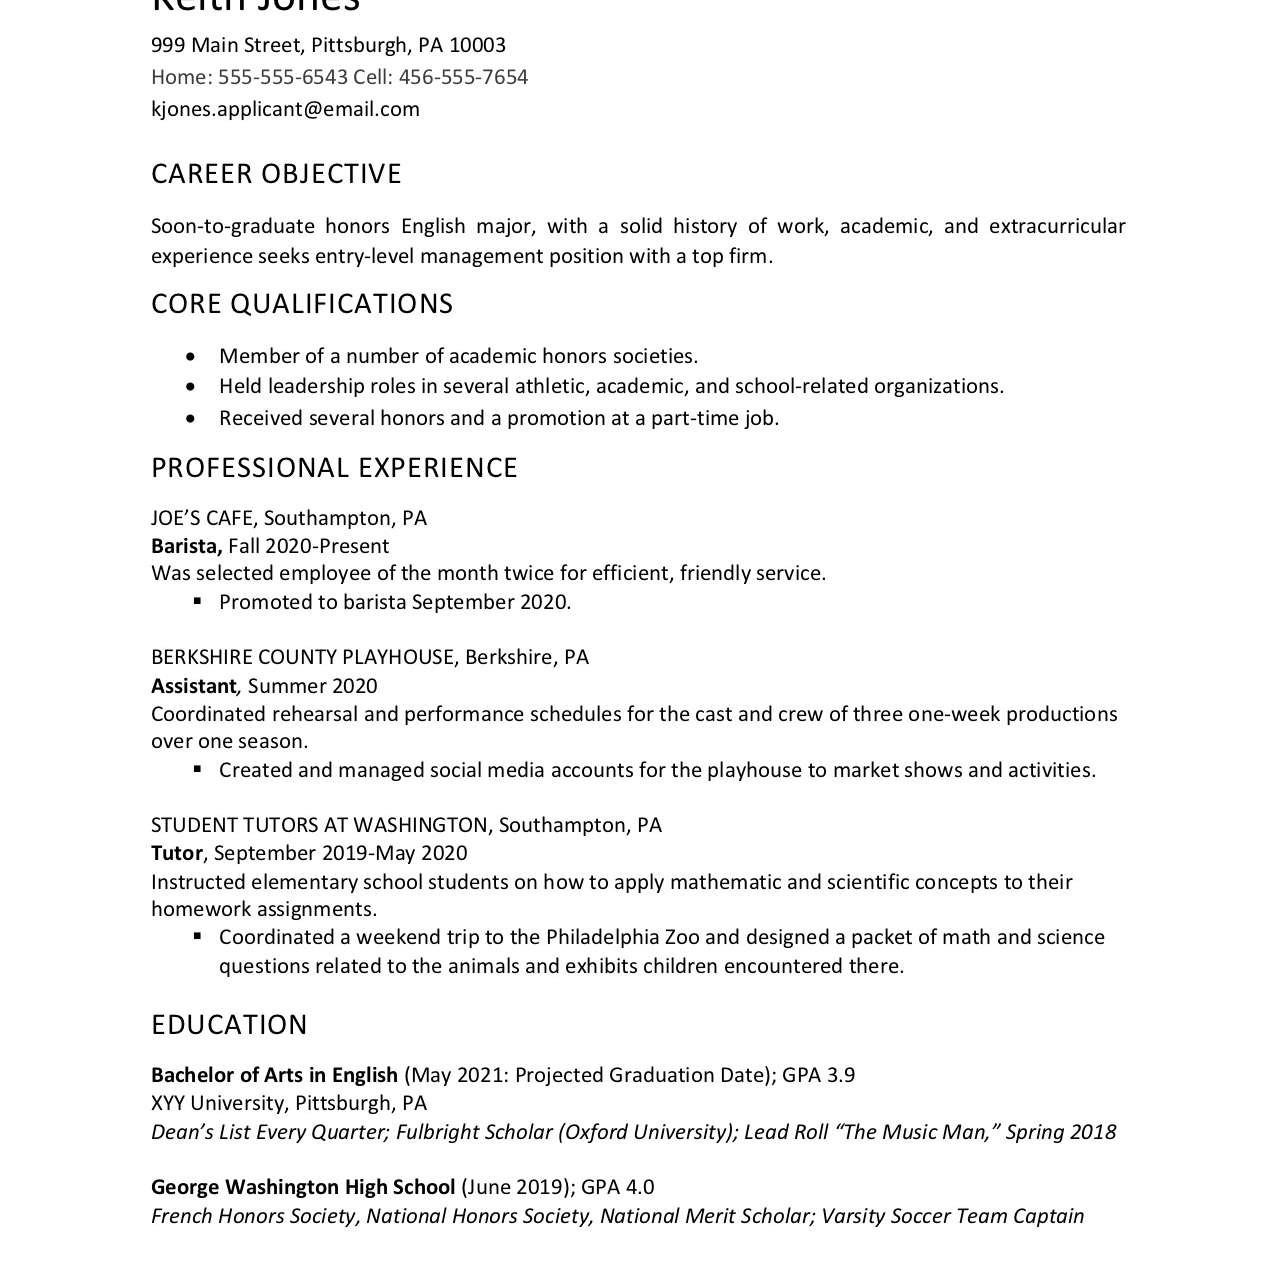 Sample Resume for Recent High School Graduate High School Graduate Resume Example and Writing Tips